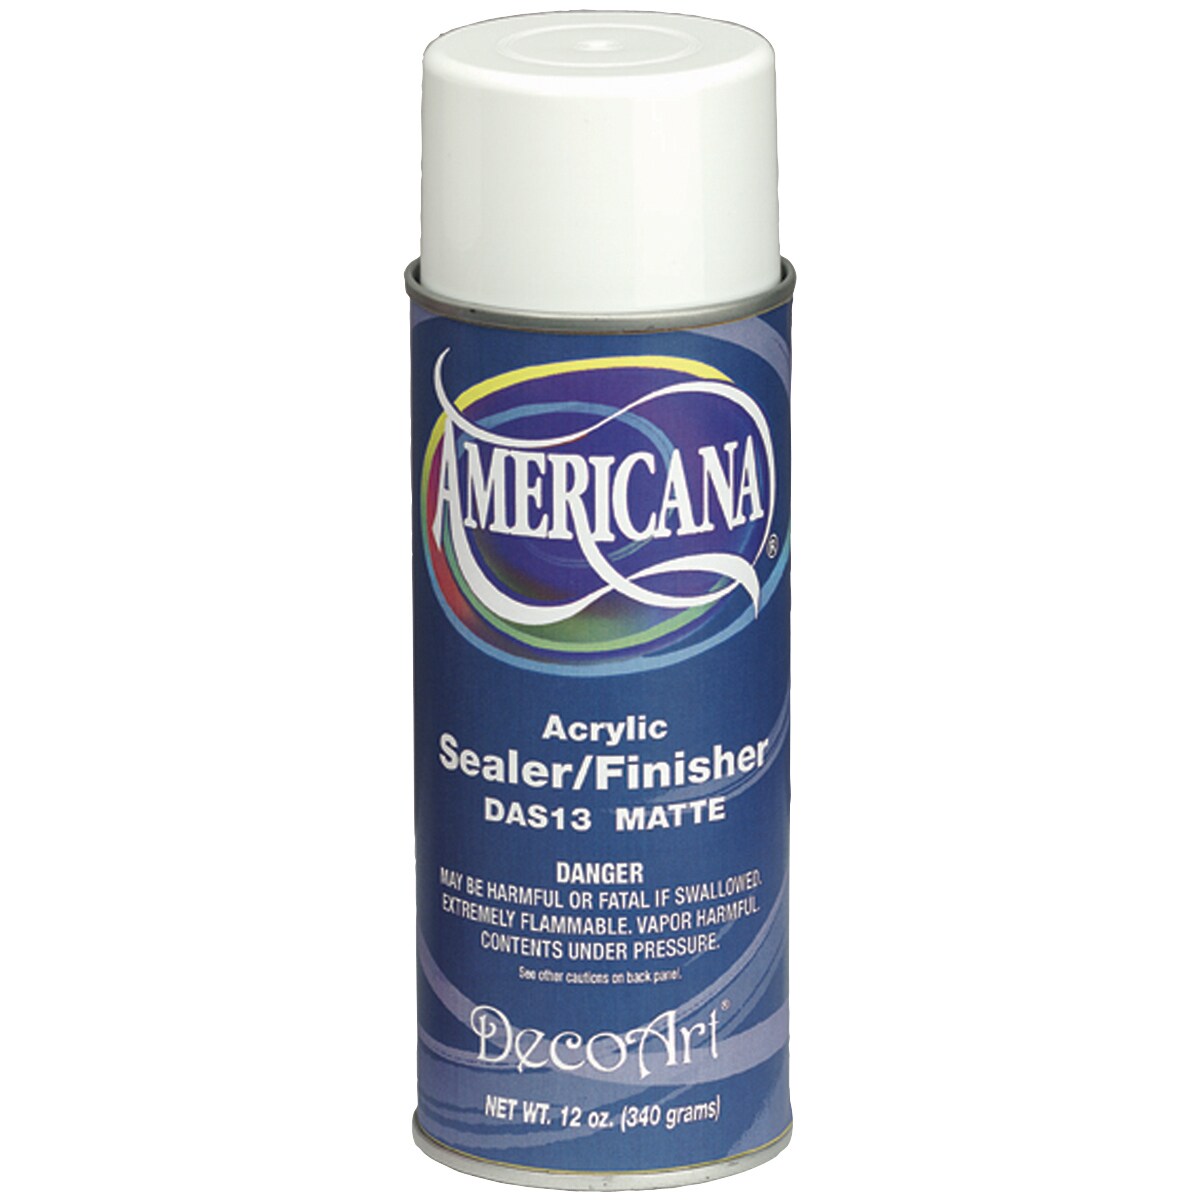 americana acrylic sealer